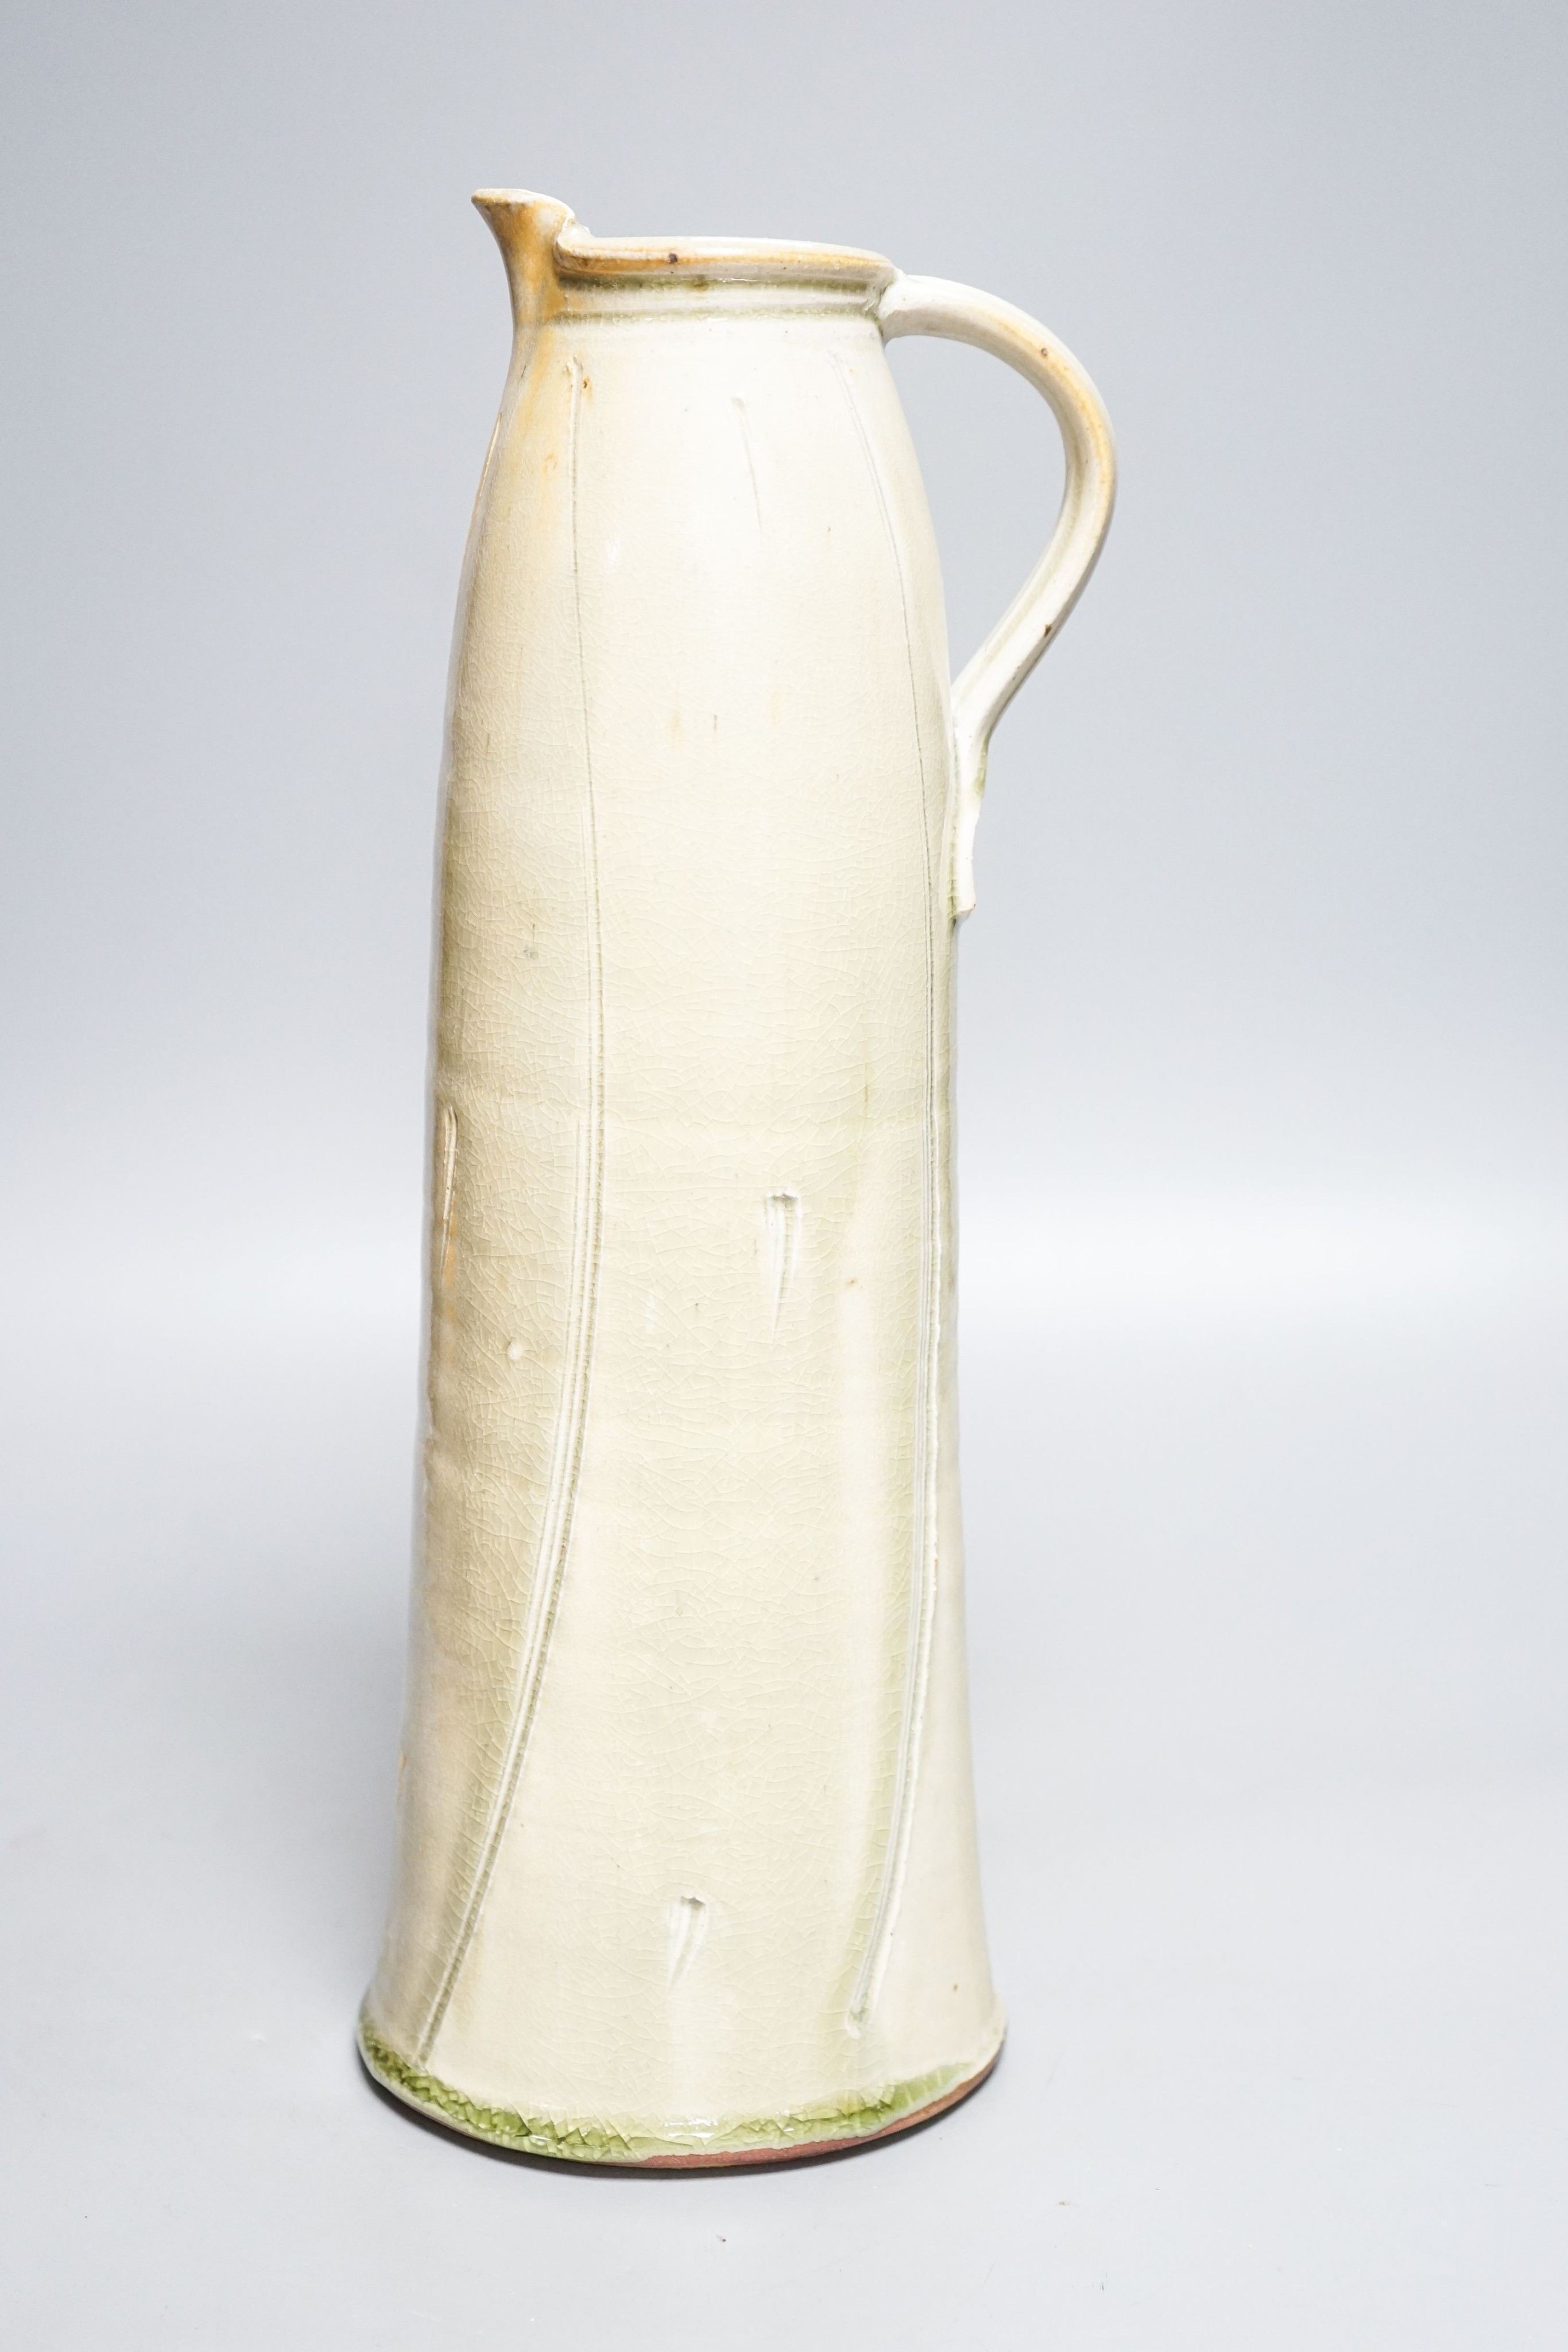 Stephen Parry (b.1950), a tall pale celadon glazed jug 39cm